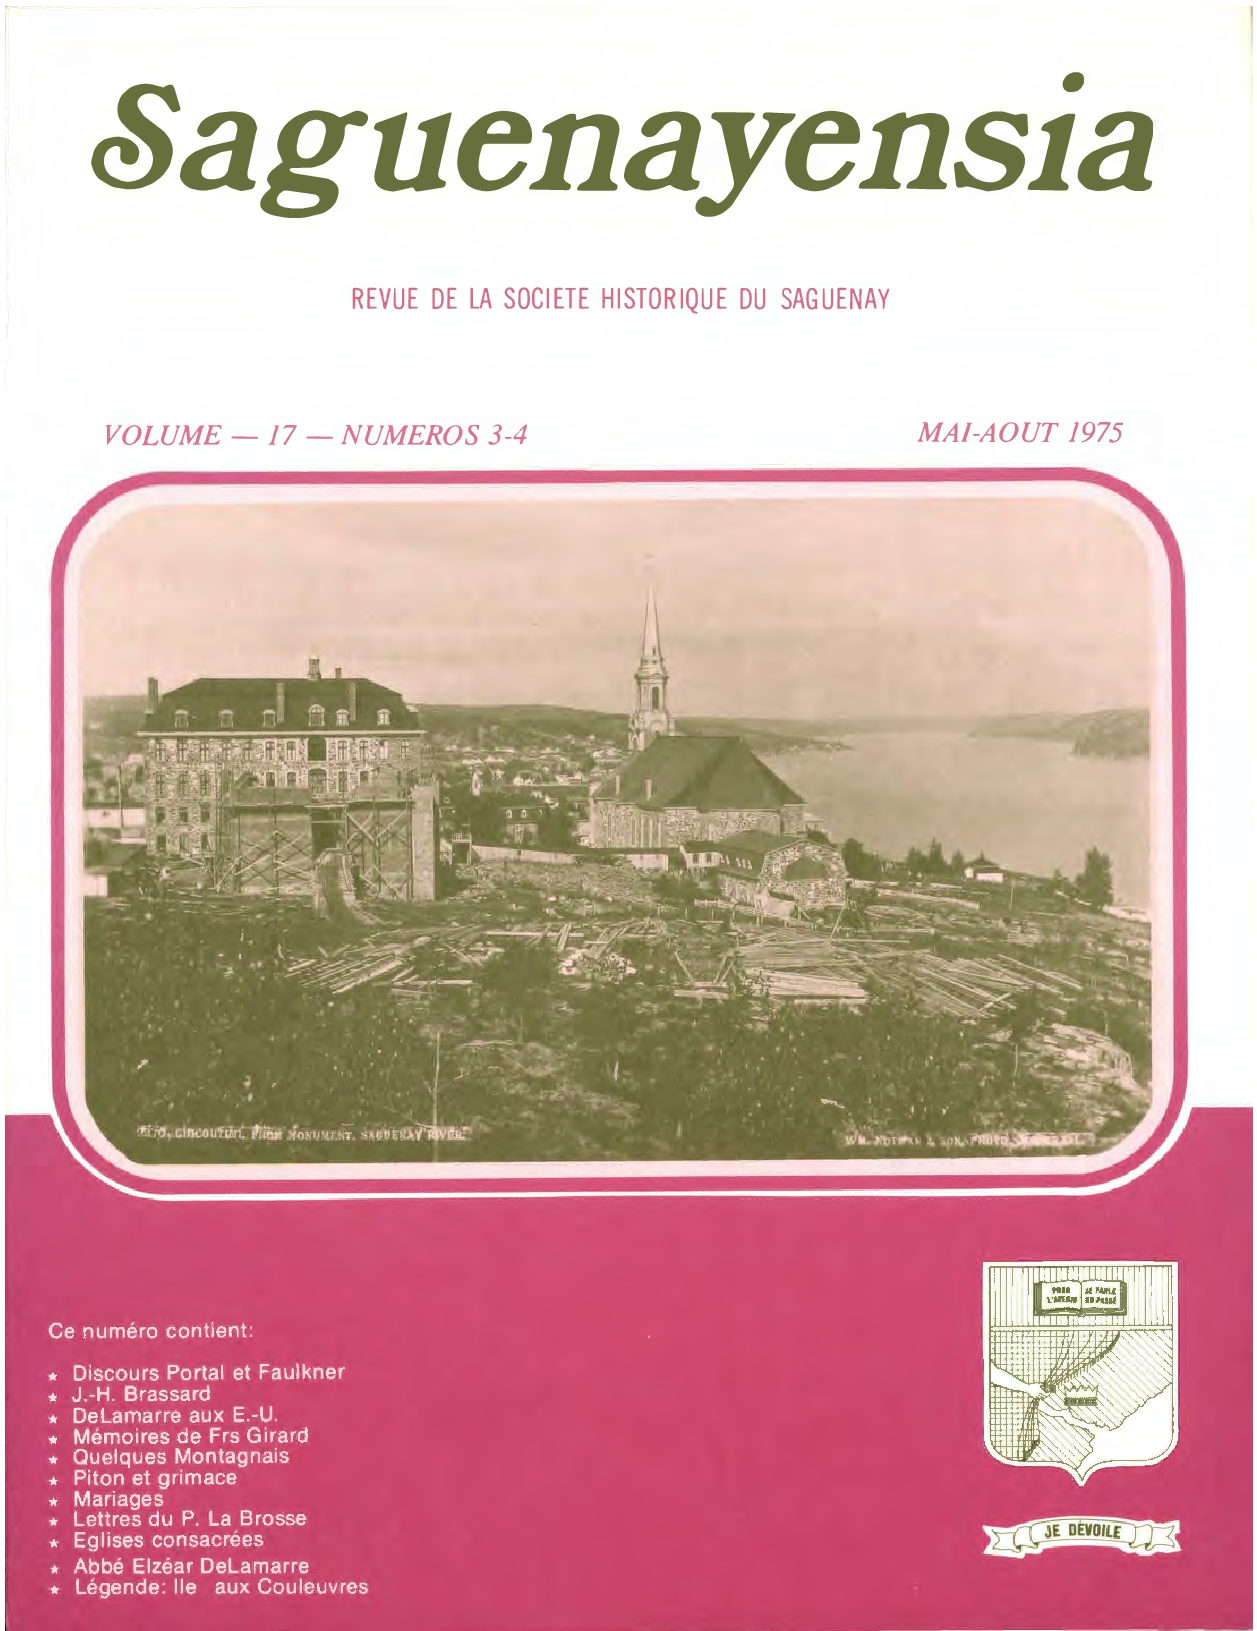 Saguenayensia, Volume 17, no 03-04, 1975Varia